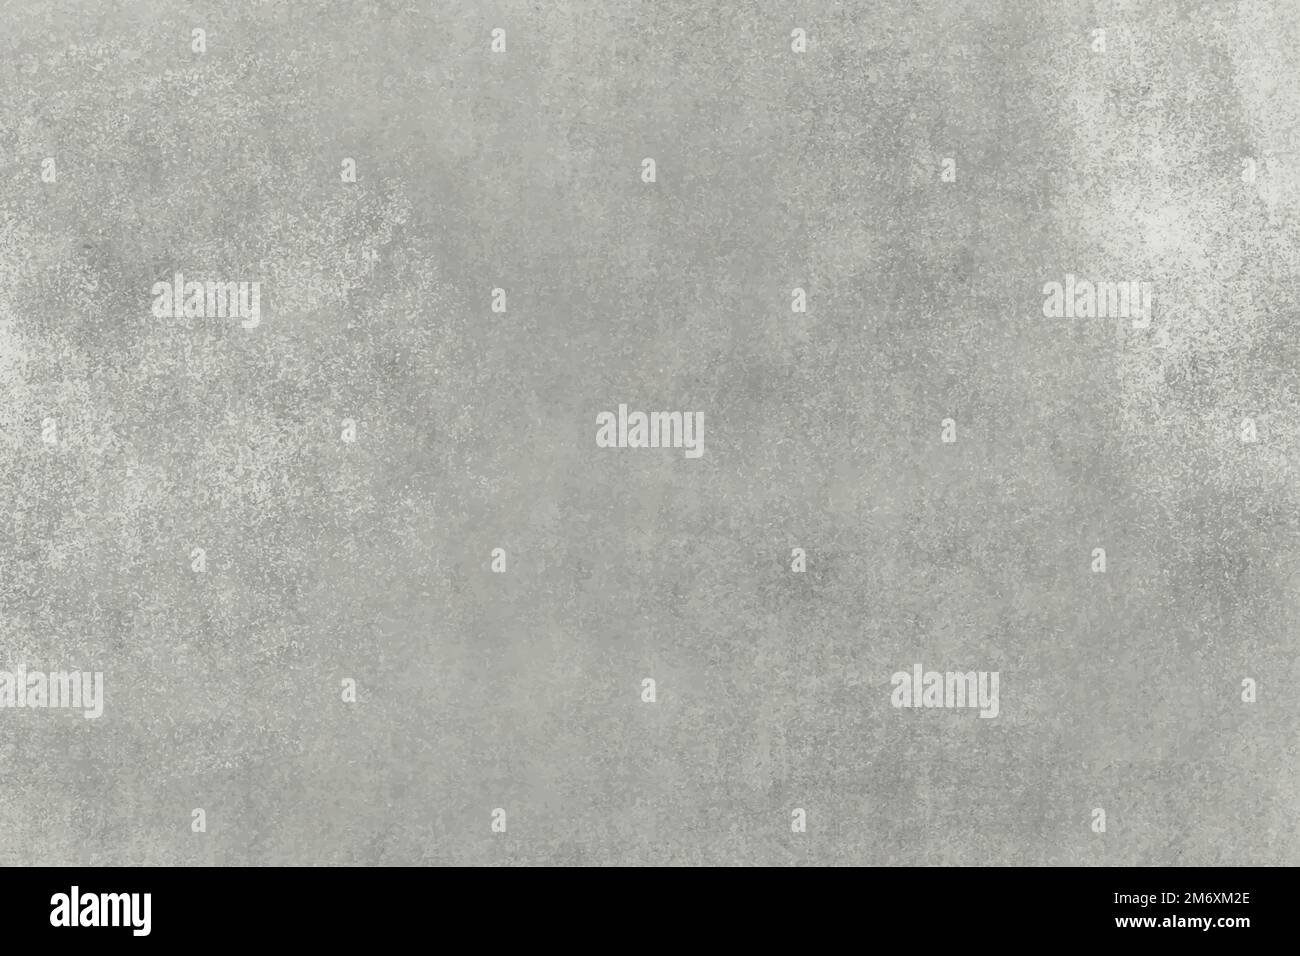 Grunge gray concrete textured background vector Stock Vector